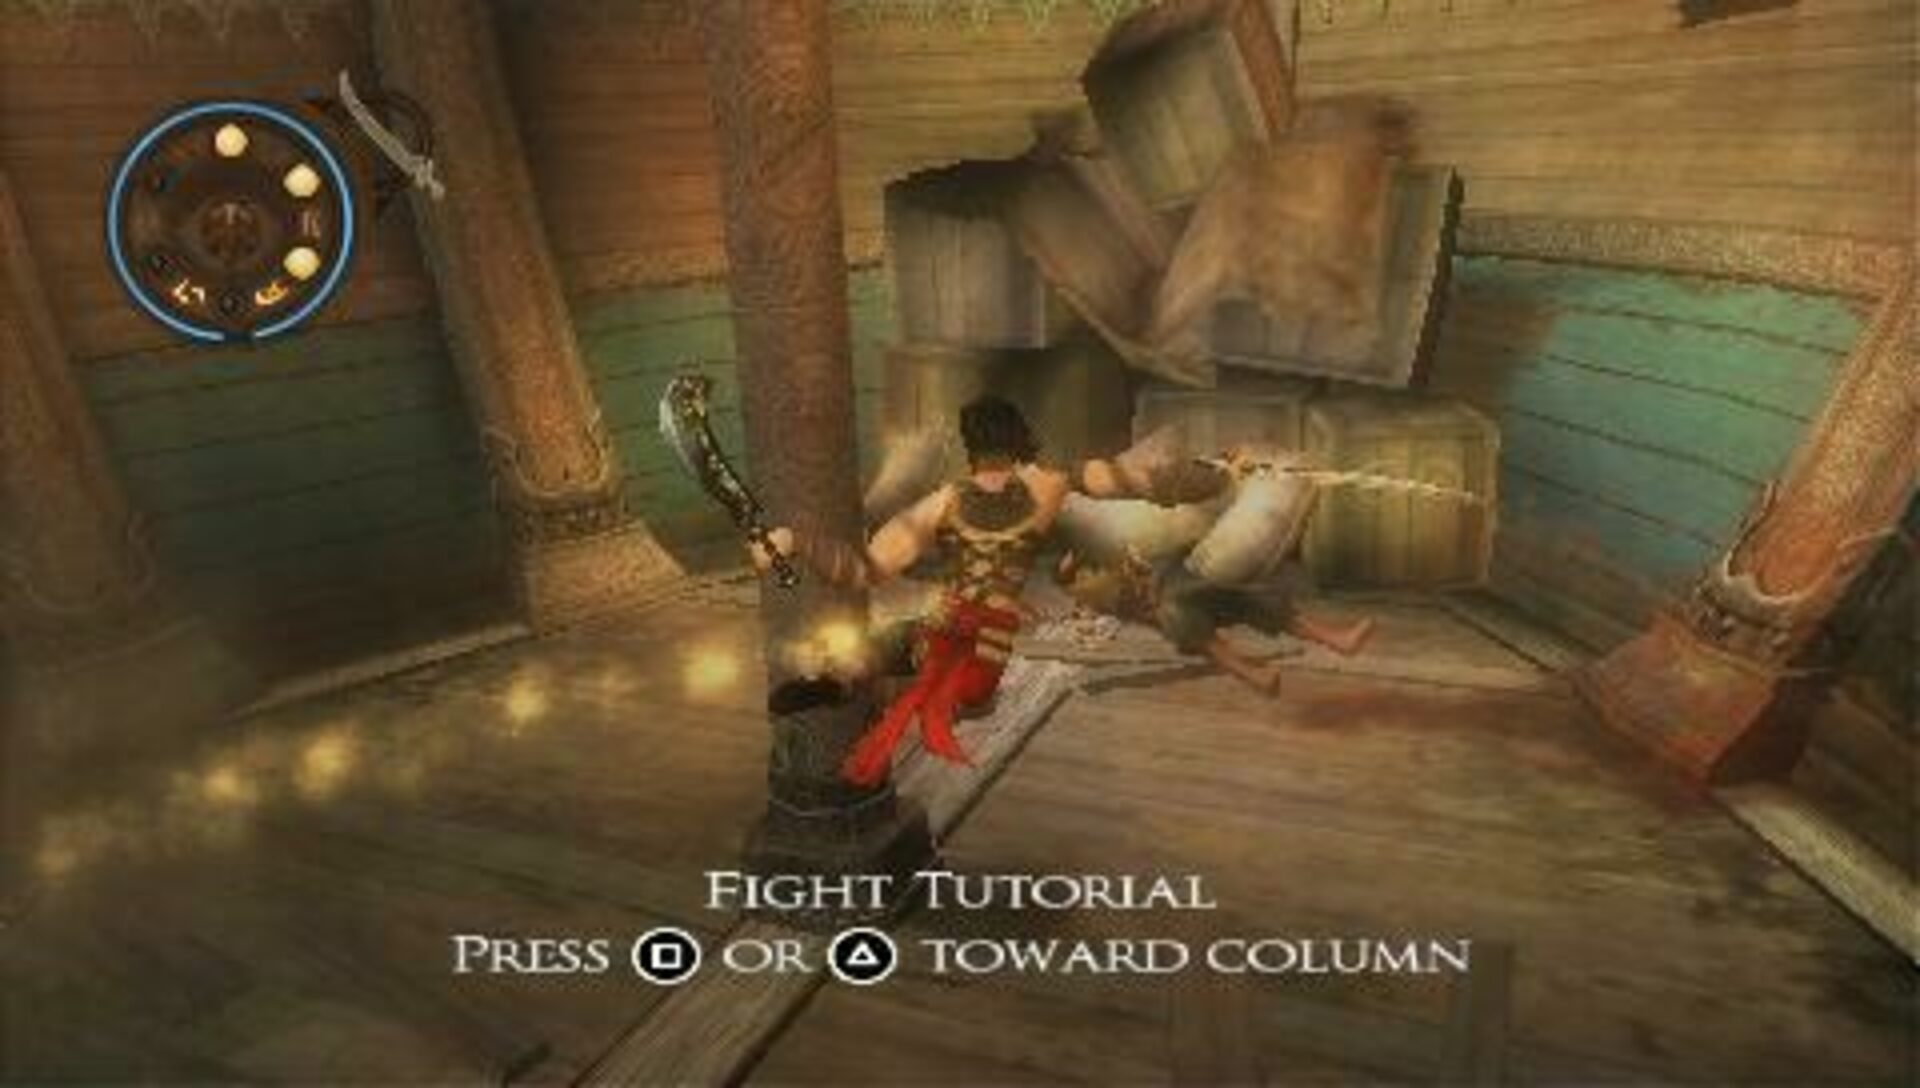 Prince of Persia: Revelations PSP Platinum (Seminovo) - Play n' Play